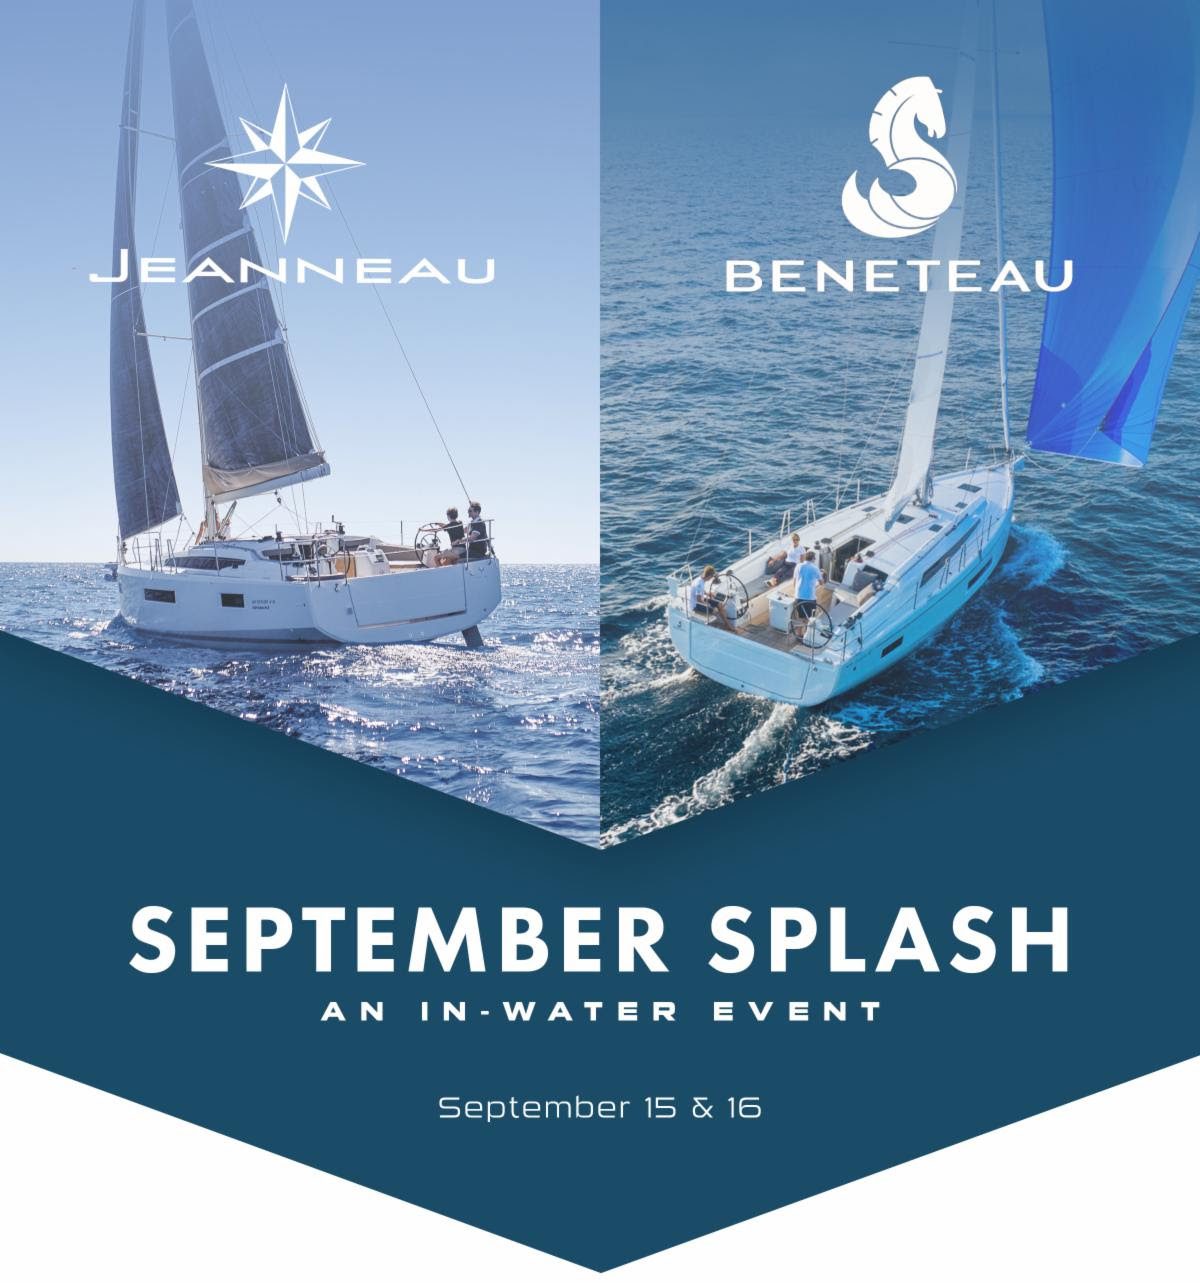 September Splash: An In-Water Event